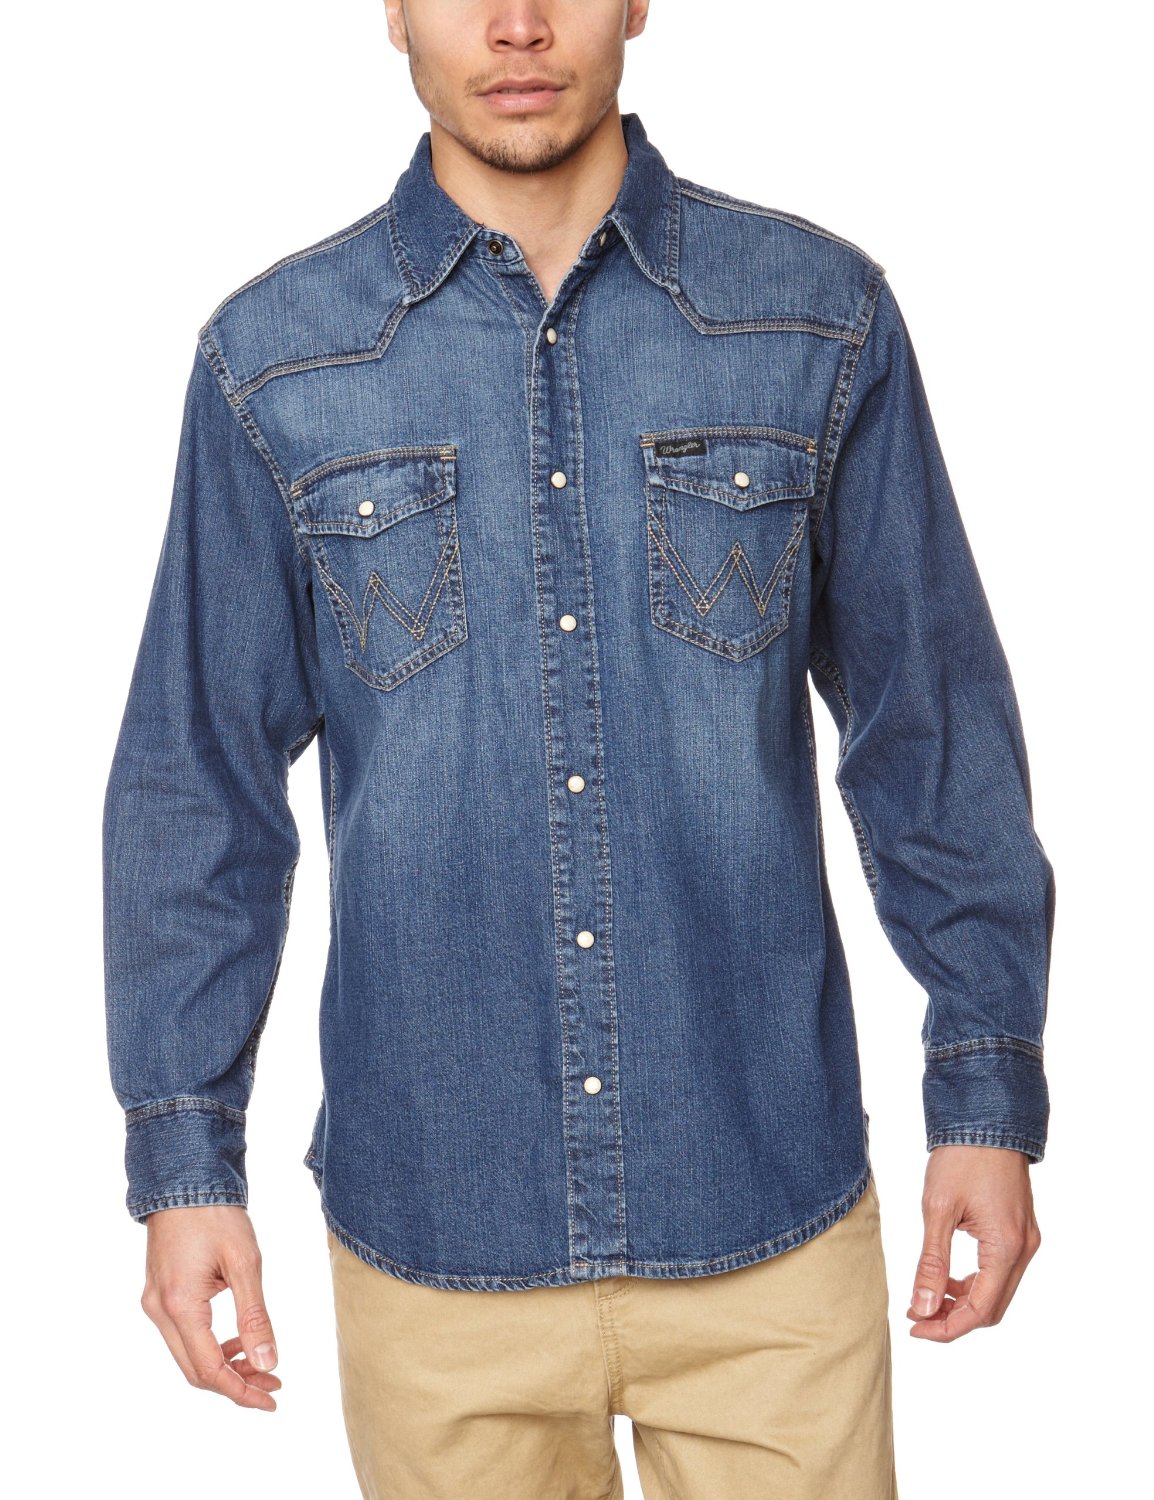 New Mens Wrangler Western Mid Stone Blue Denim Shirt | eBay